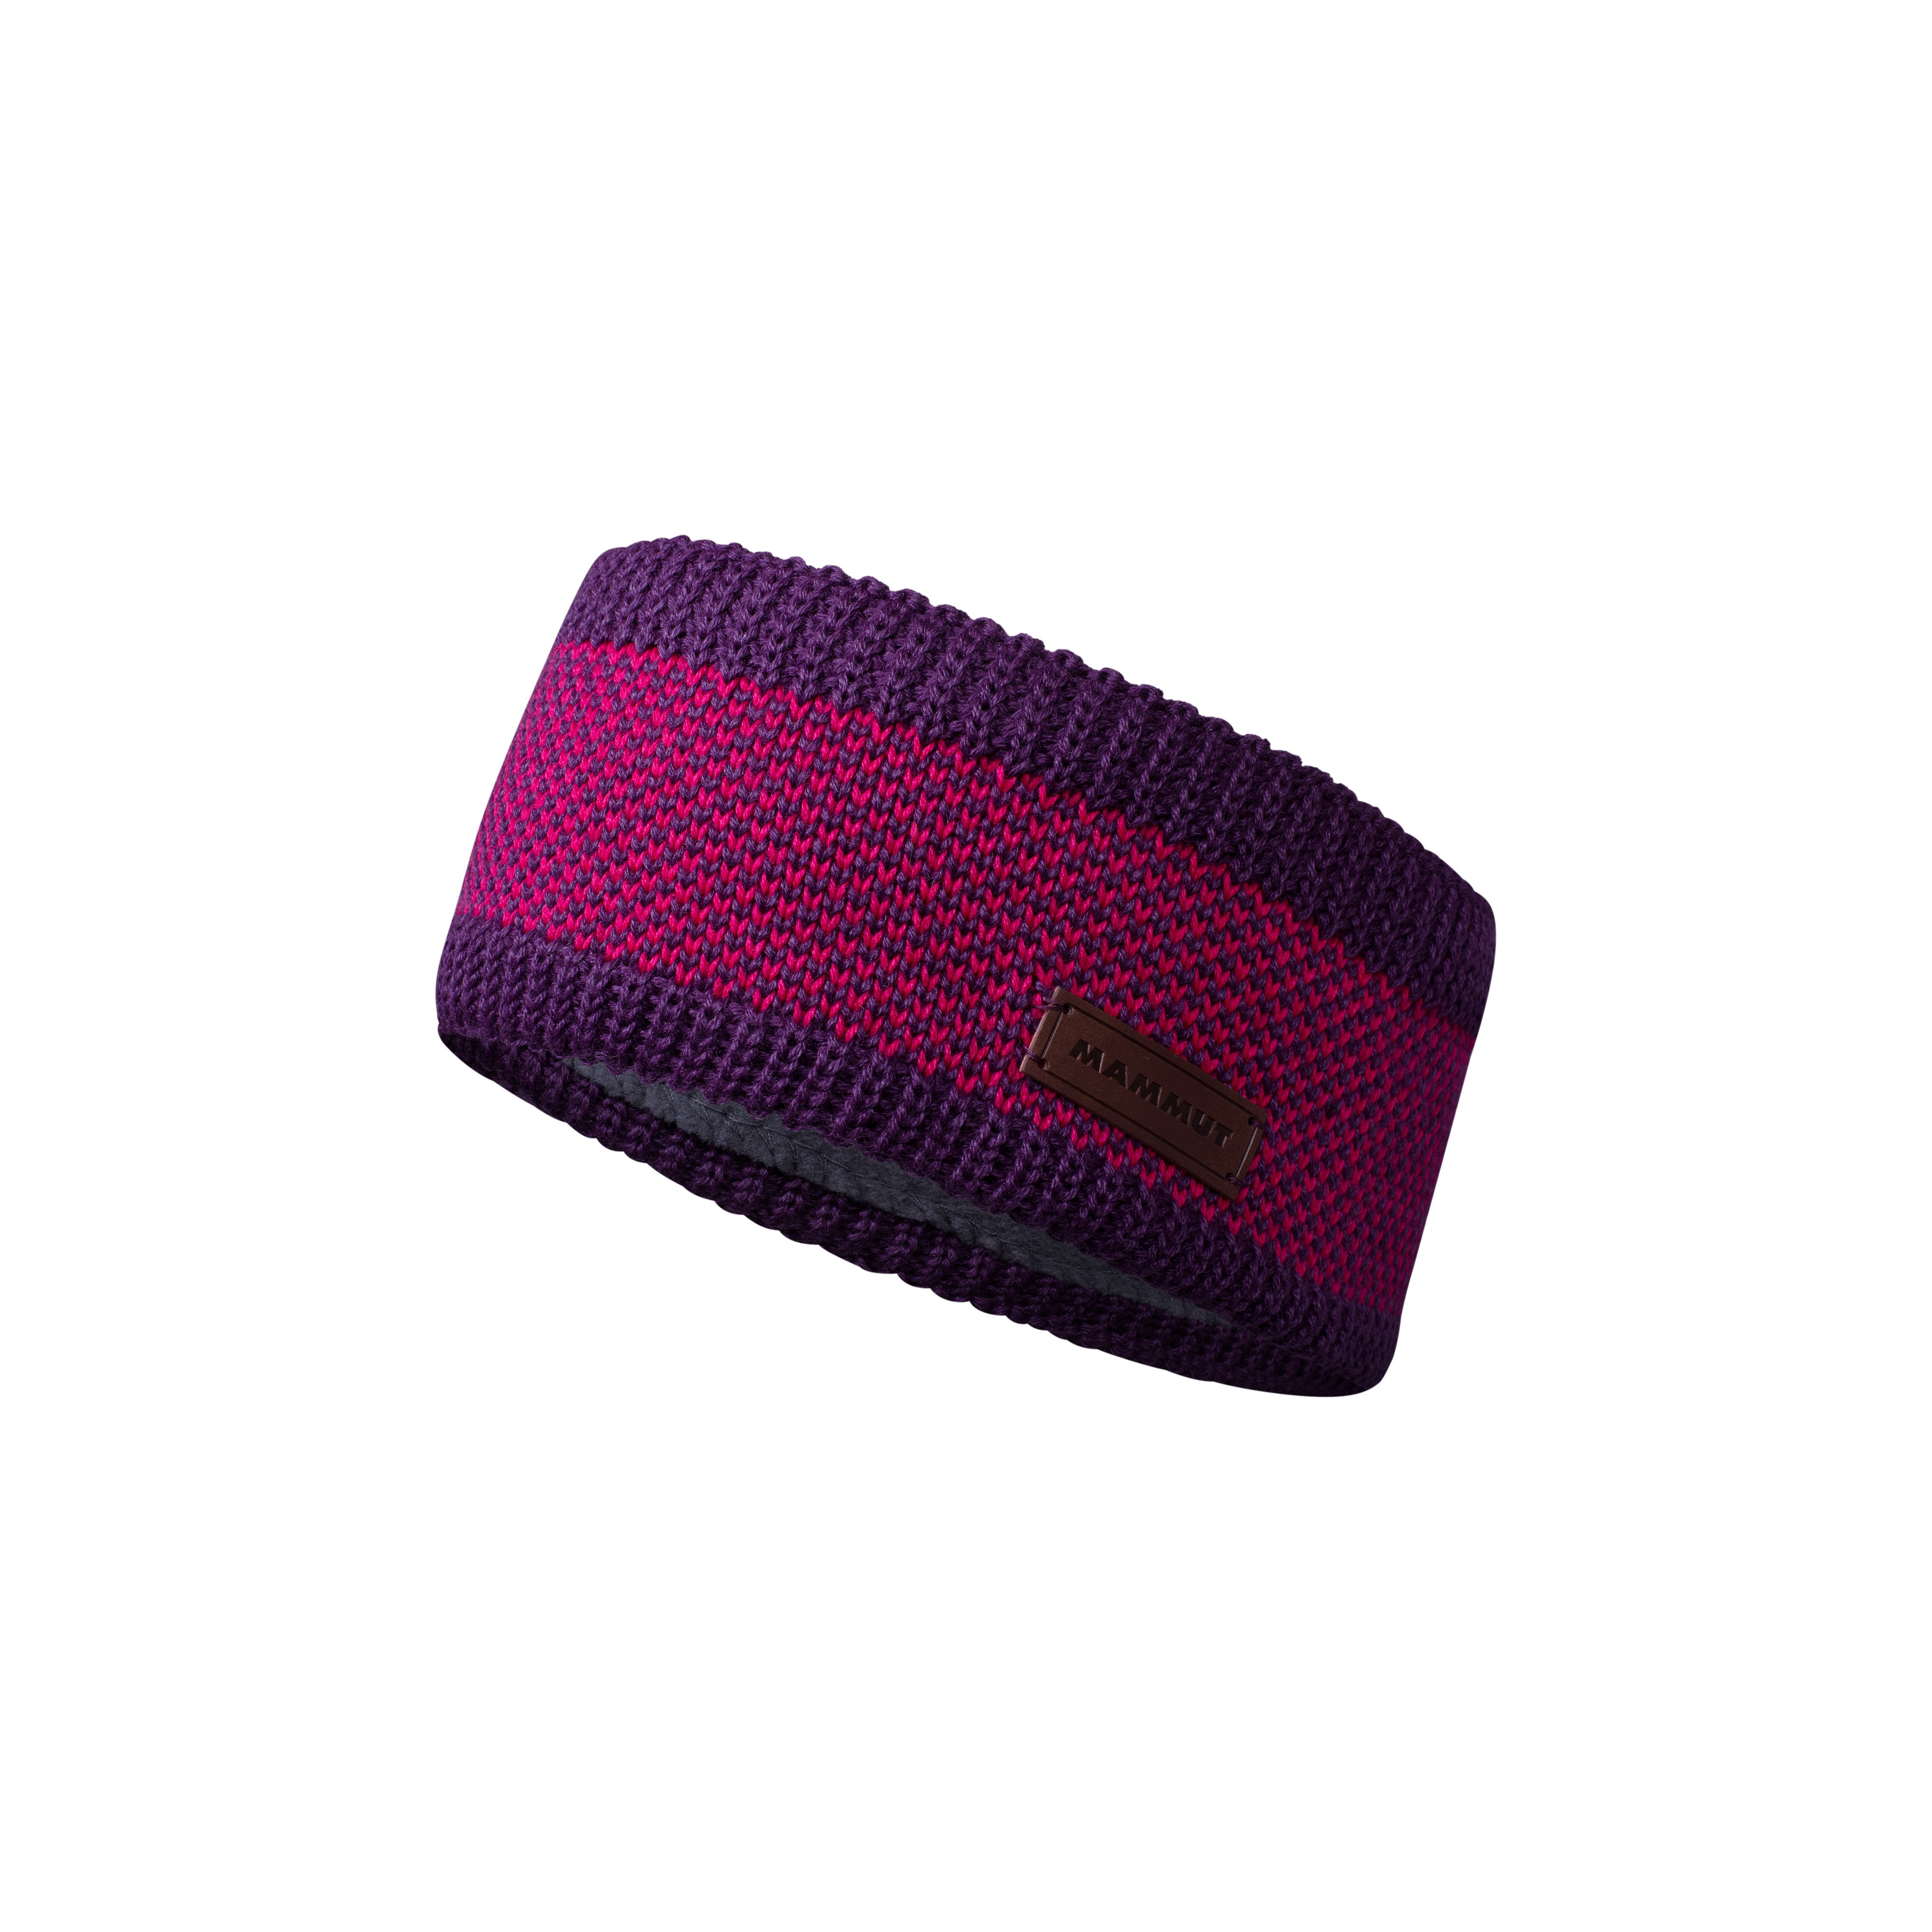 Snow Headband - grape-pink, one size product image